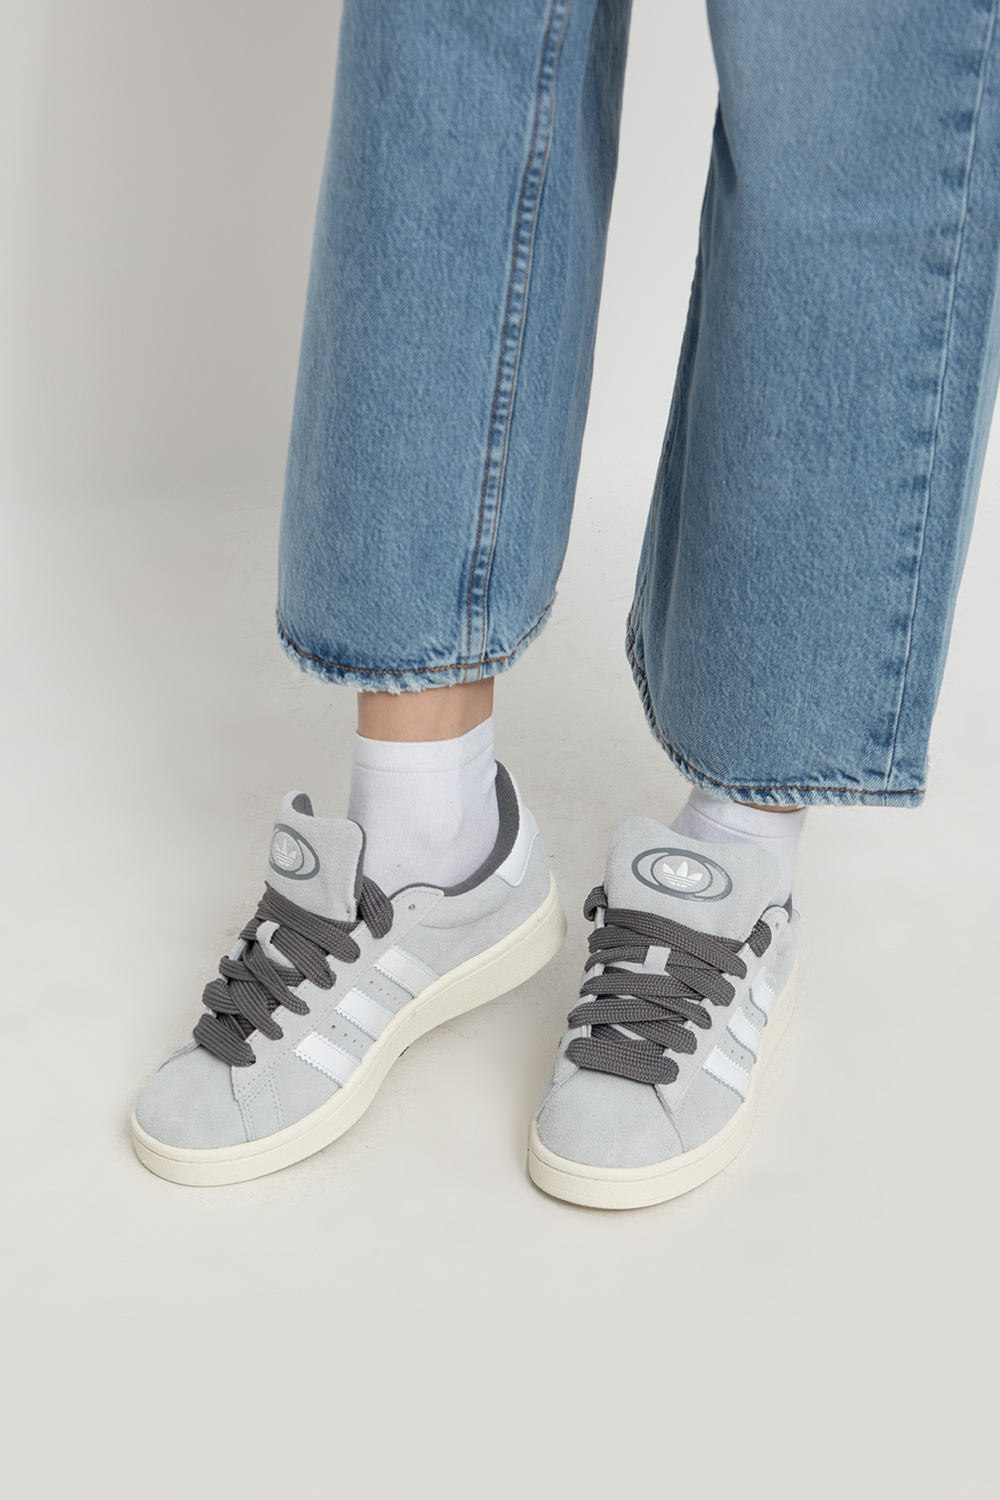 IetpShops SA - adidas cm8078 pants girls women fashion style - Grey 'Campus  00s' sneakers ADIDAS Originals